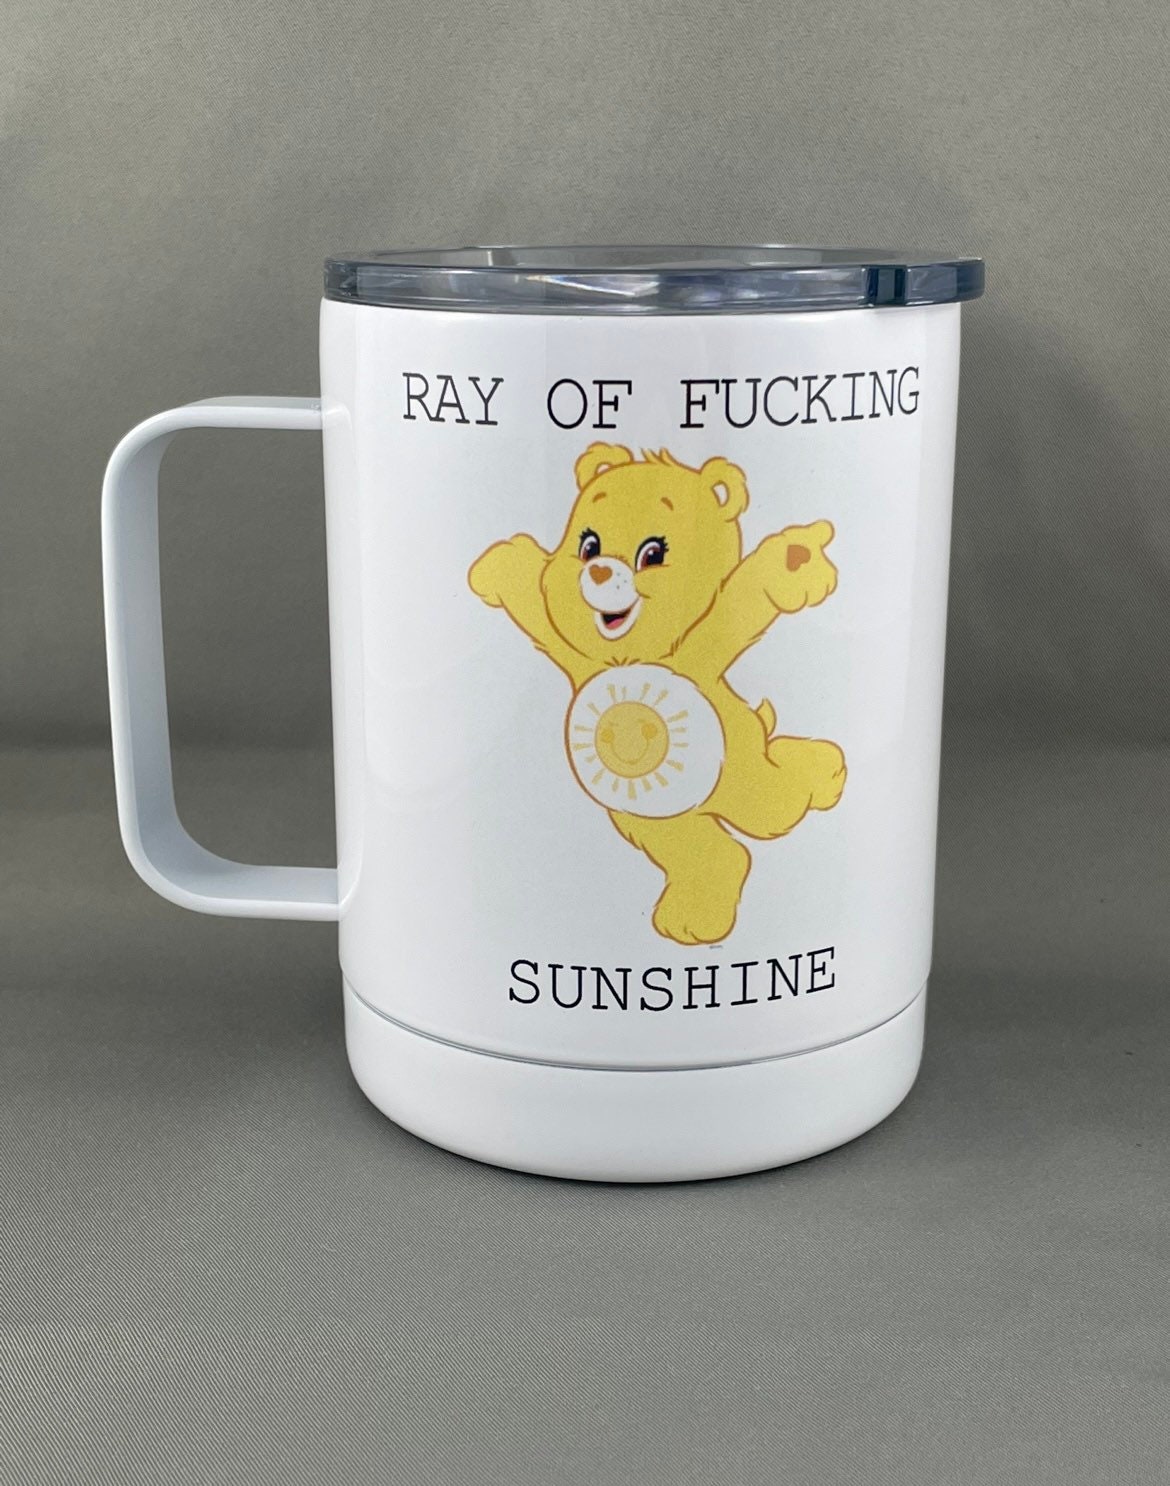 Swear Bear Mug - Care Bear Funny Coffee Mugs